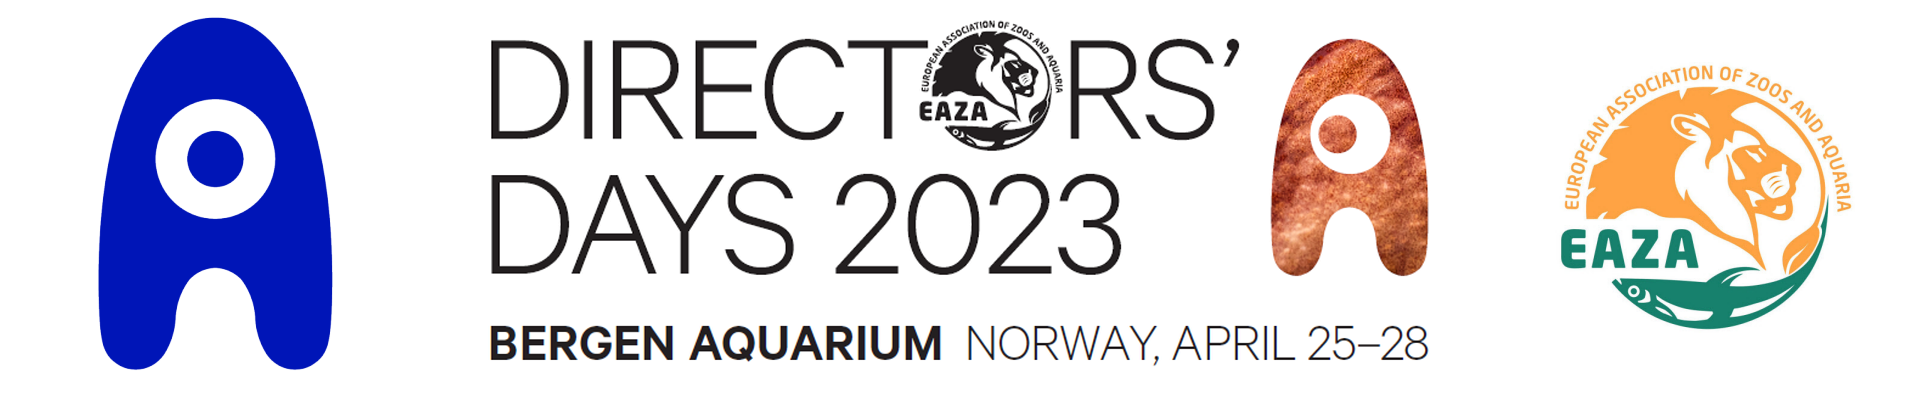 EAZA DIRECTORS' DAYS 2023